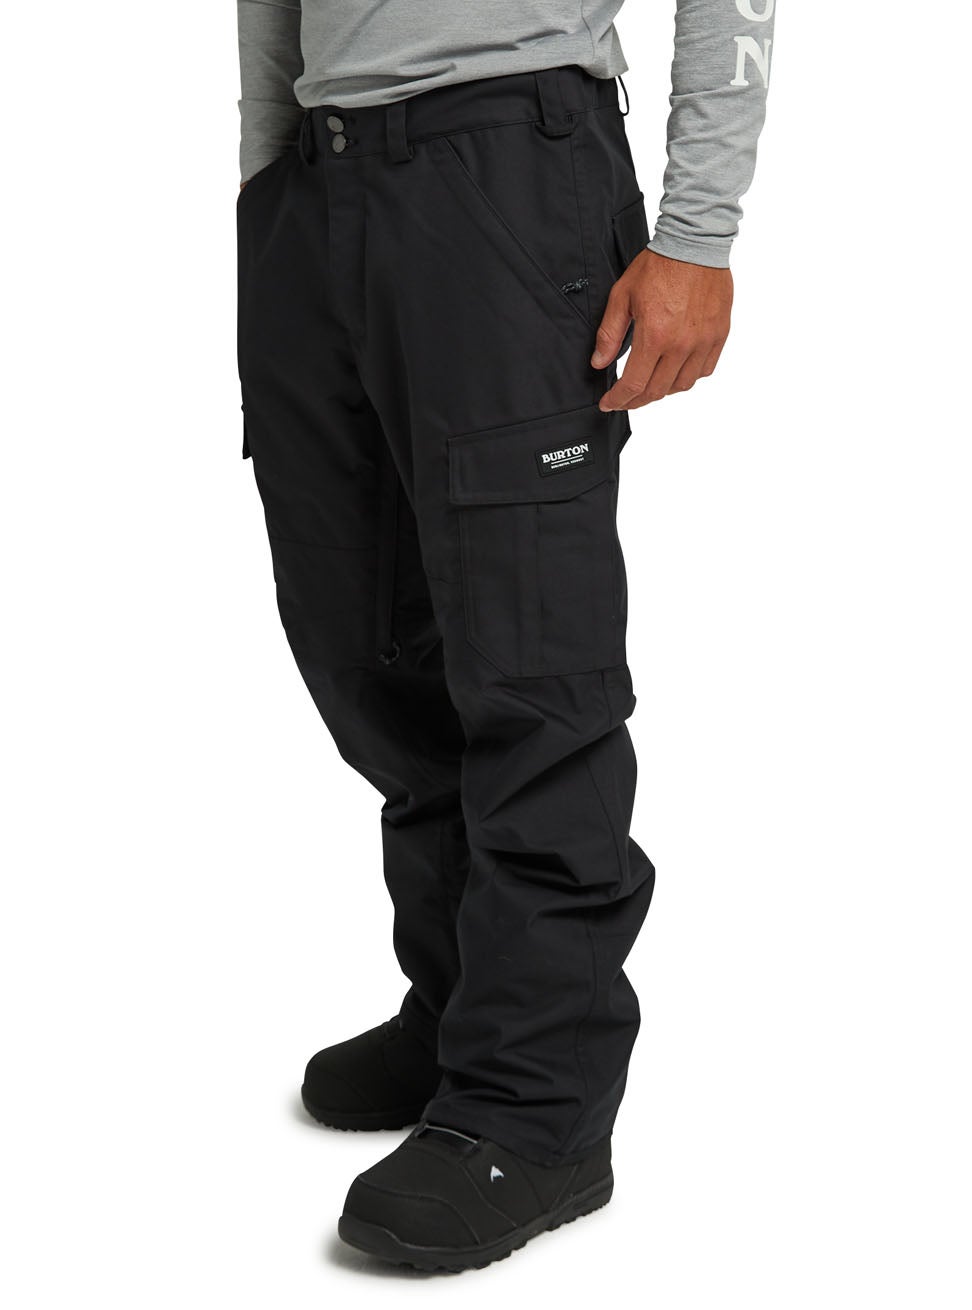 Burton Cargo Regular Fit Pant in True Black | Boardertown